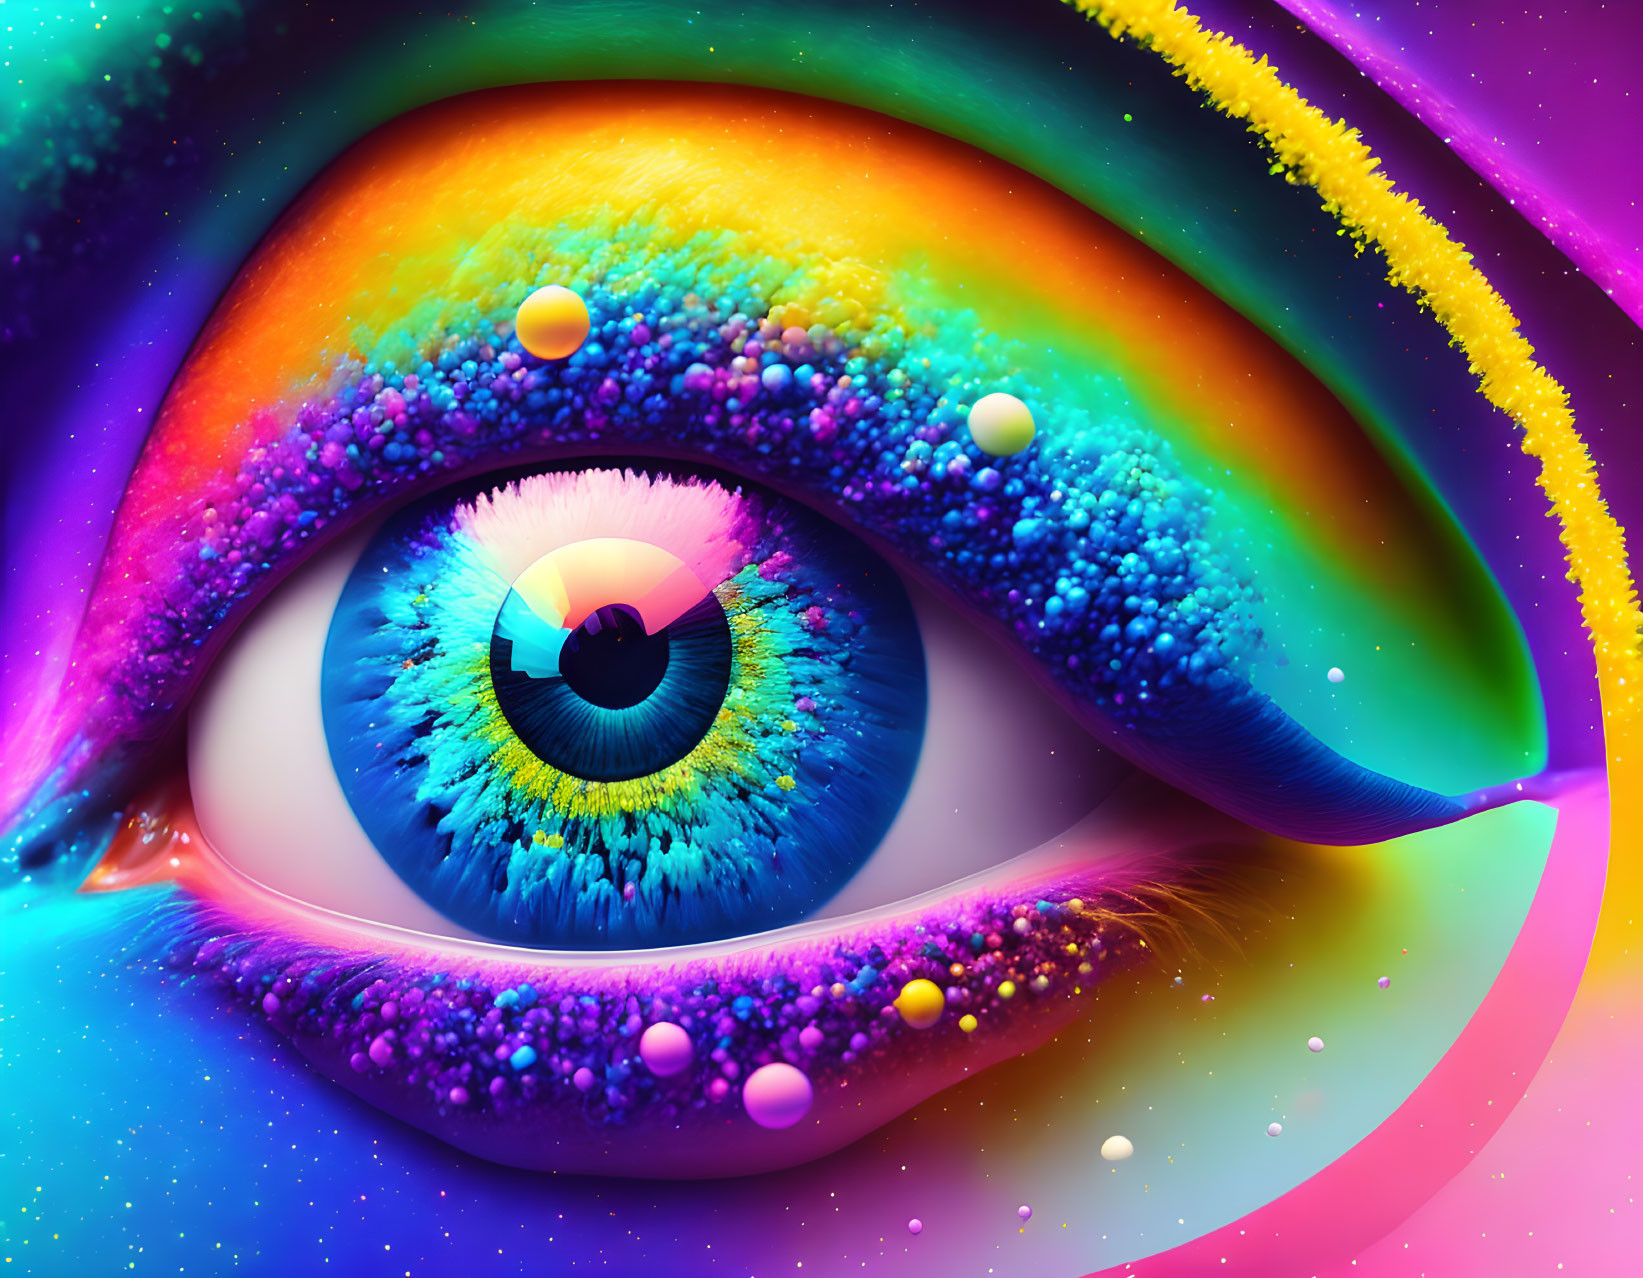 Colorful surreal eye with rainbow eyebrow and neon eyelashes.